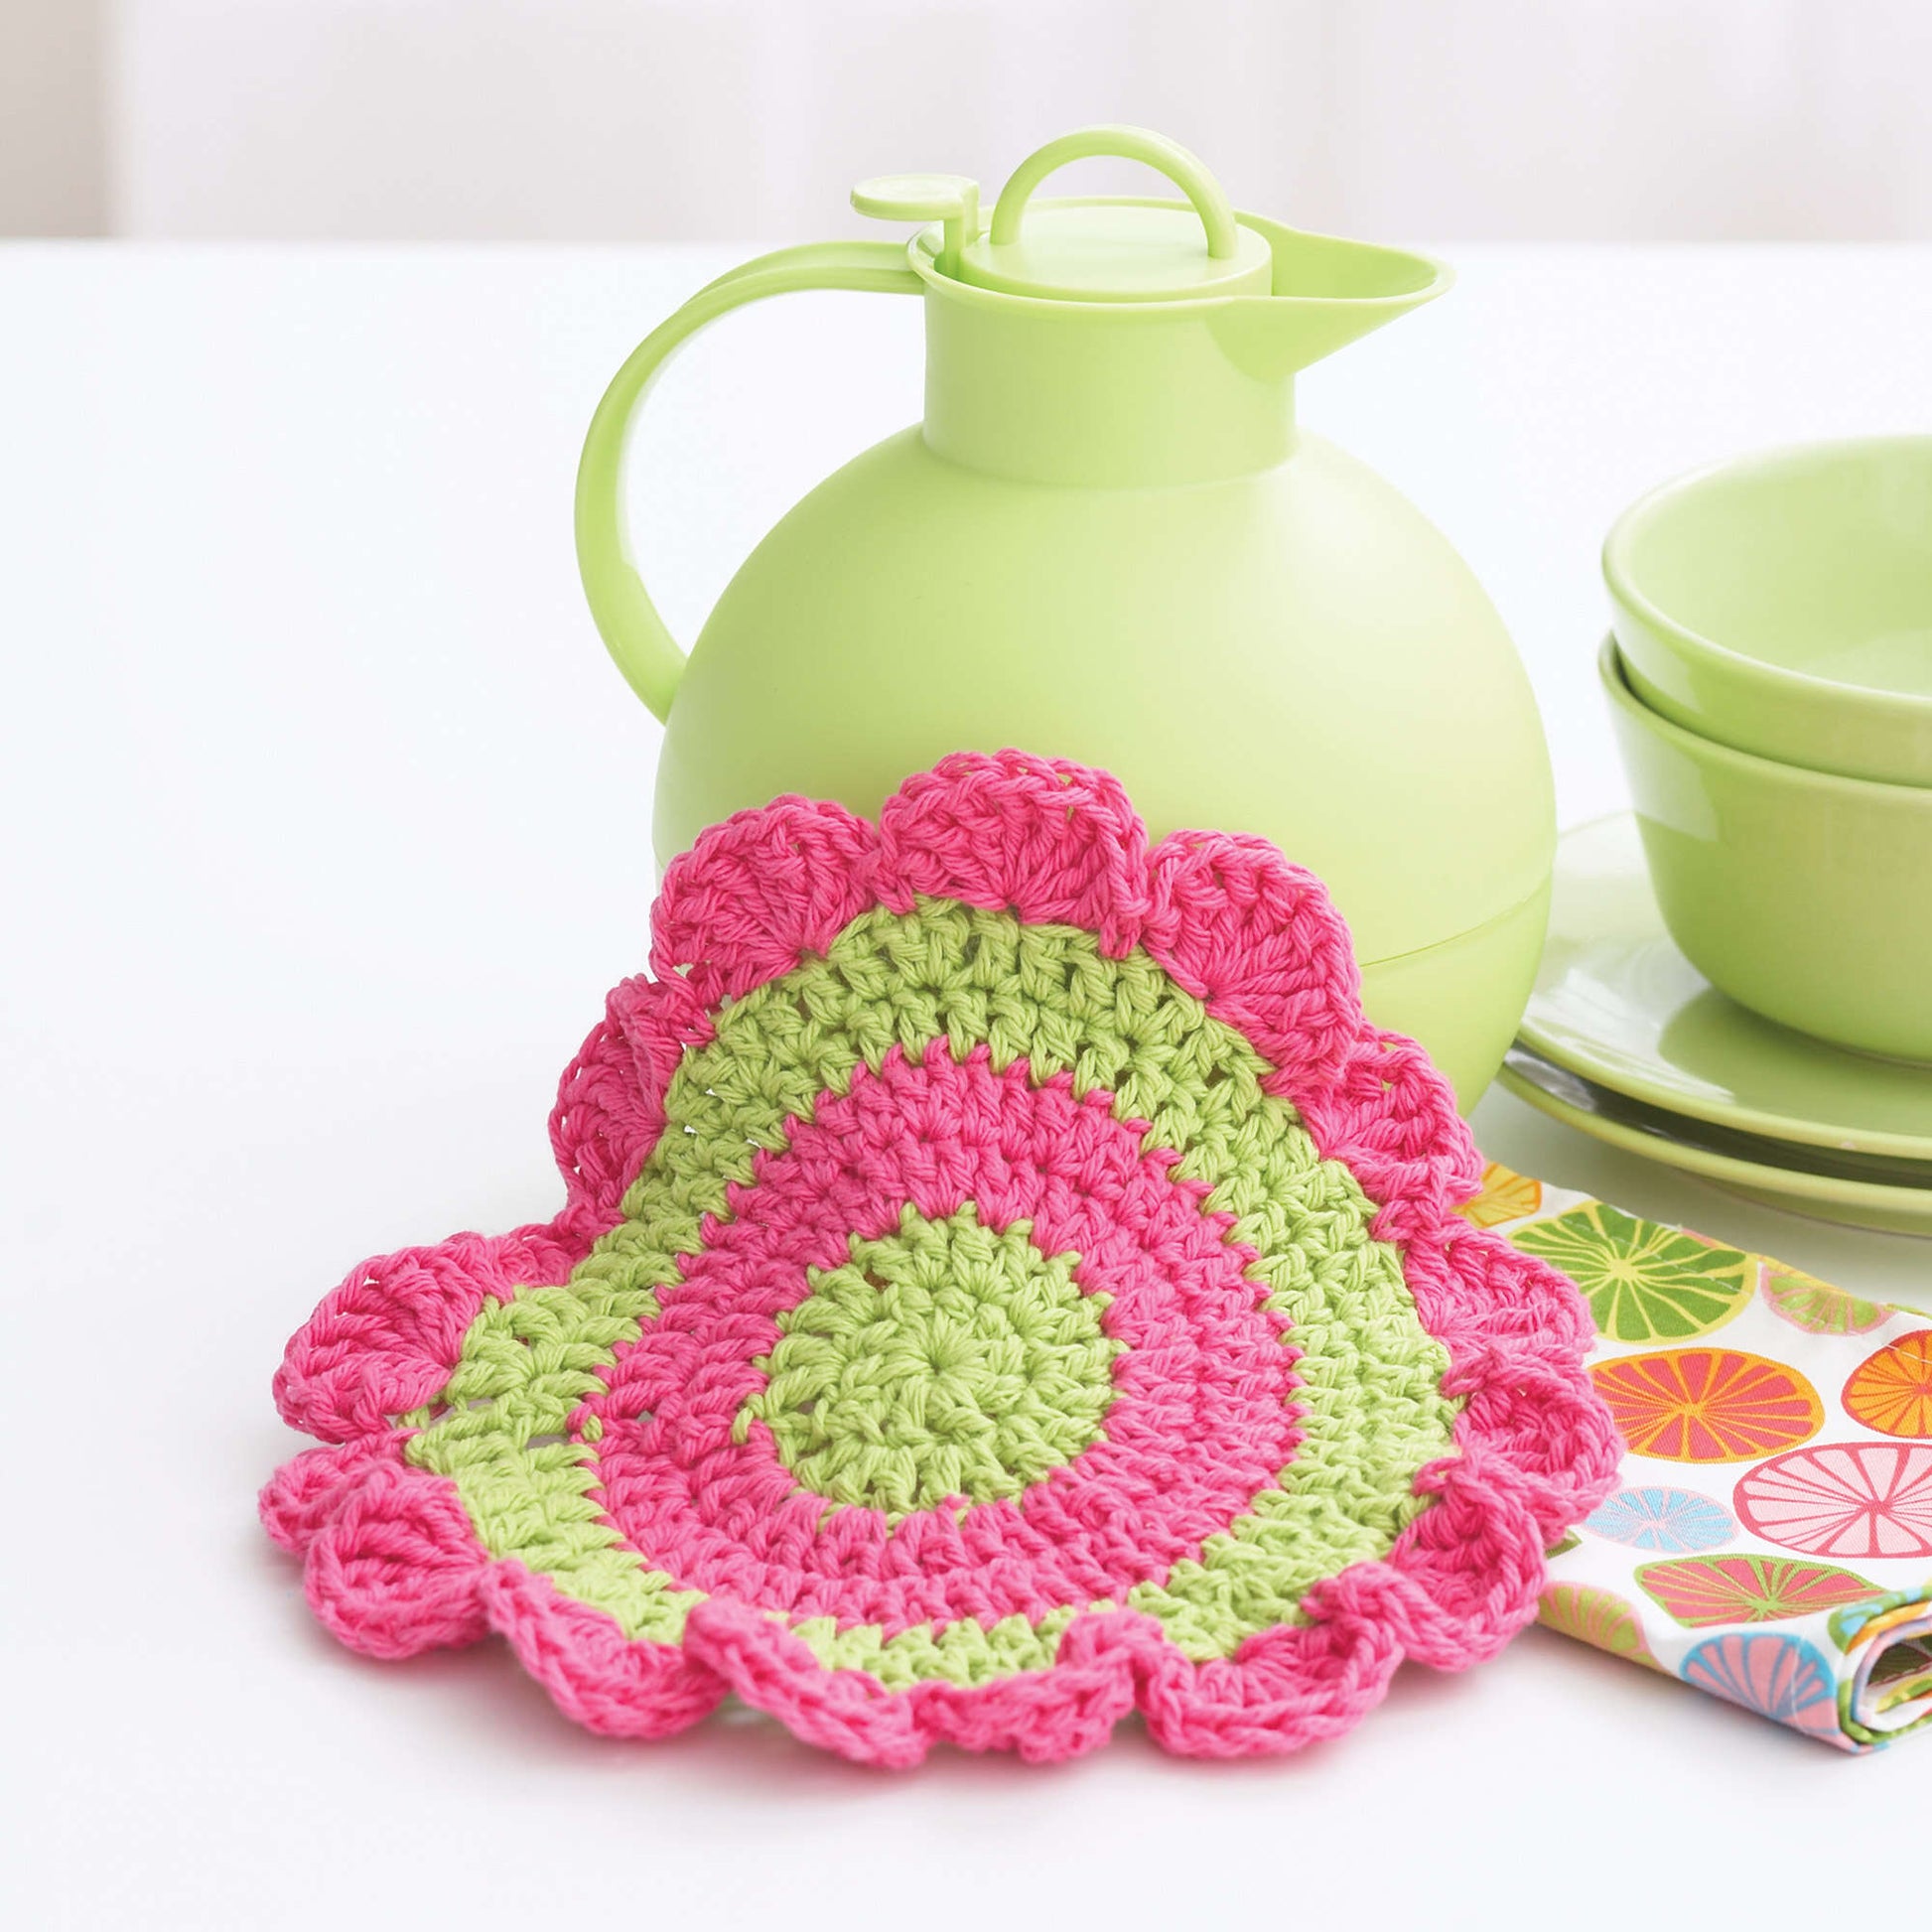 Bernat Daisy Wheel Dishcloth Crochet Dishcloth made in Bernat Handicrafter Cotton yarn